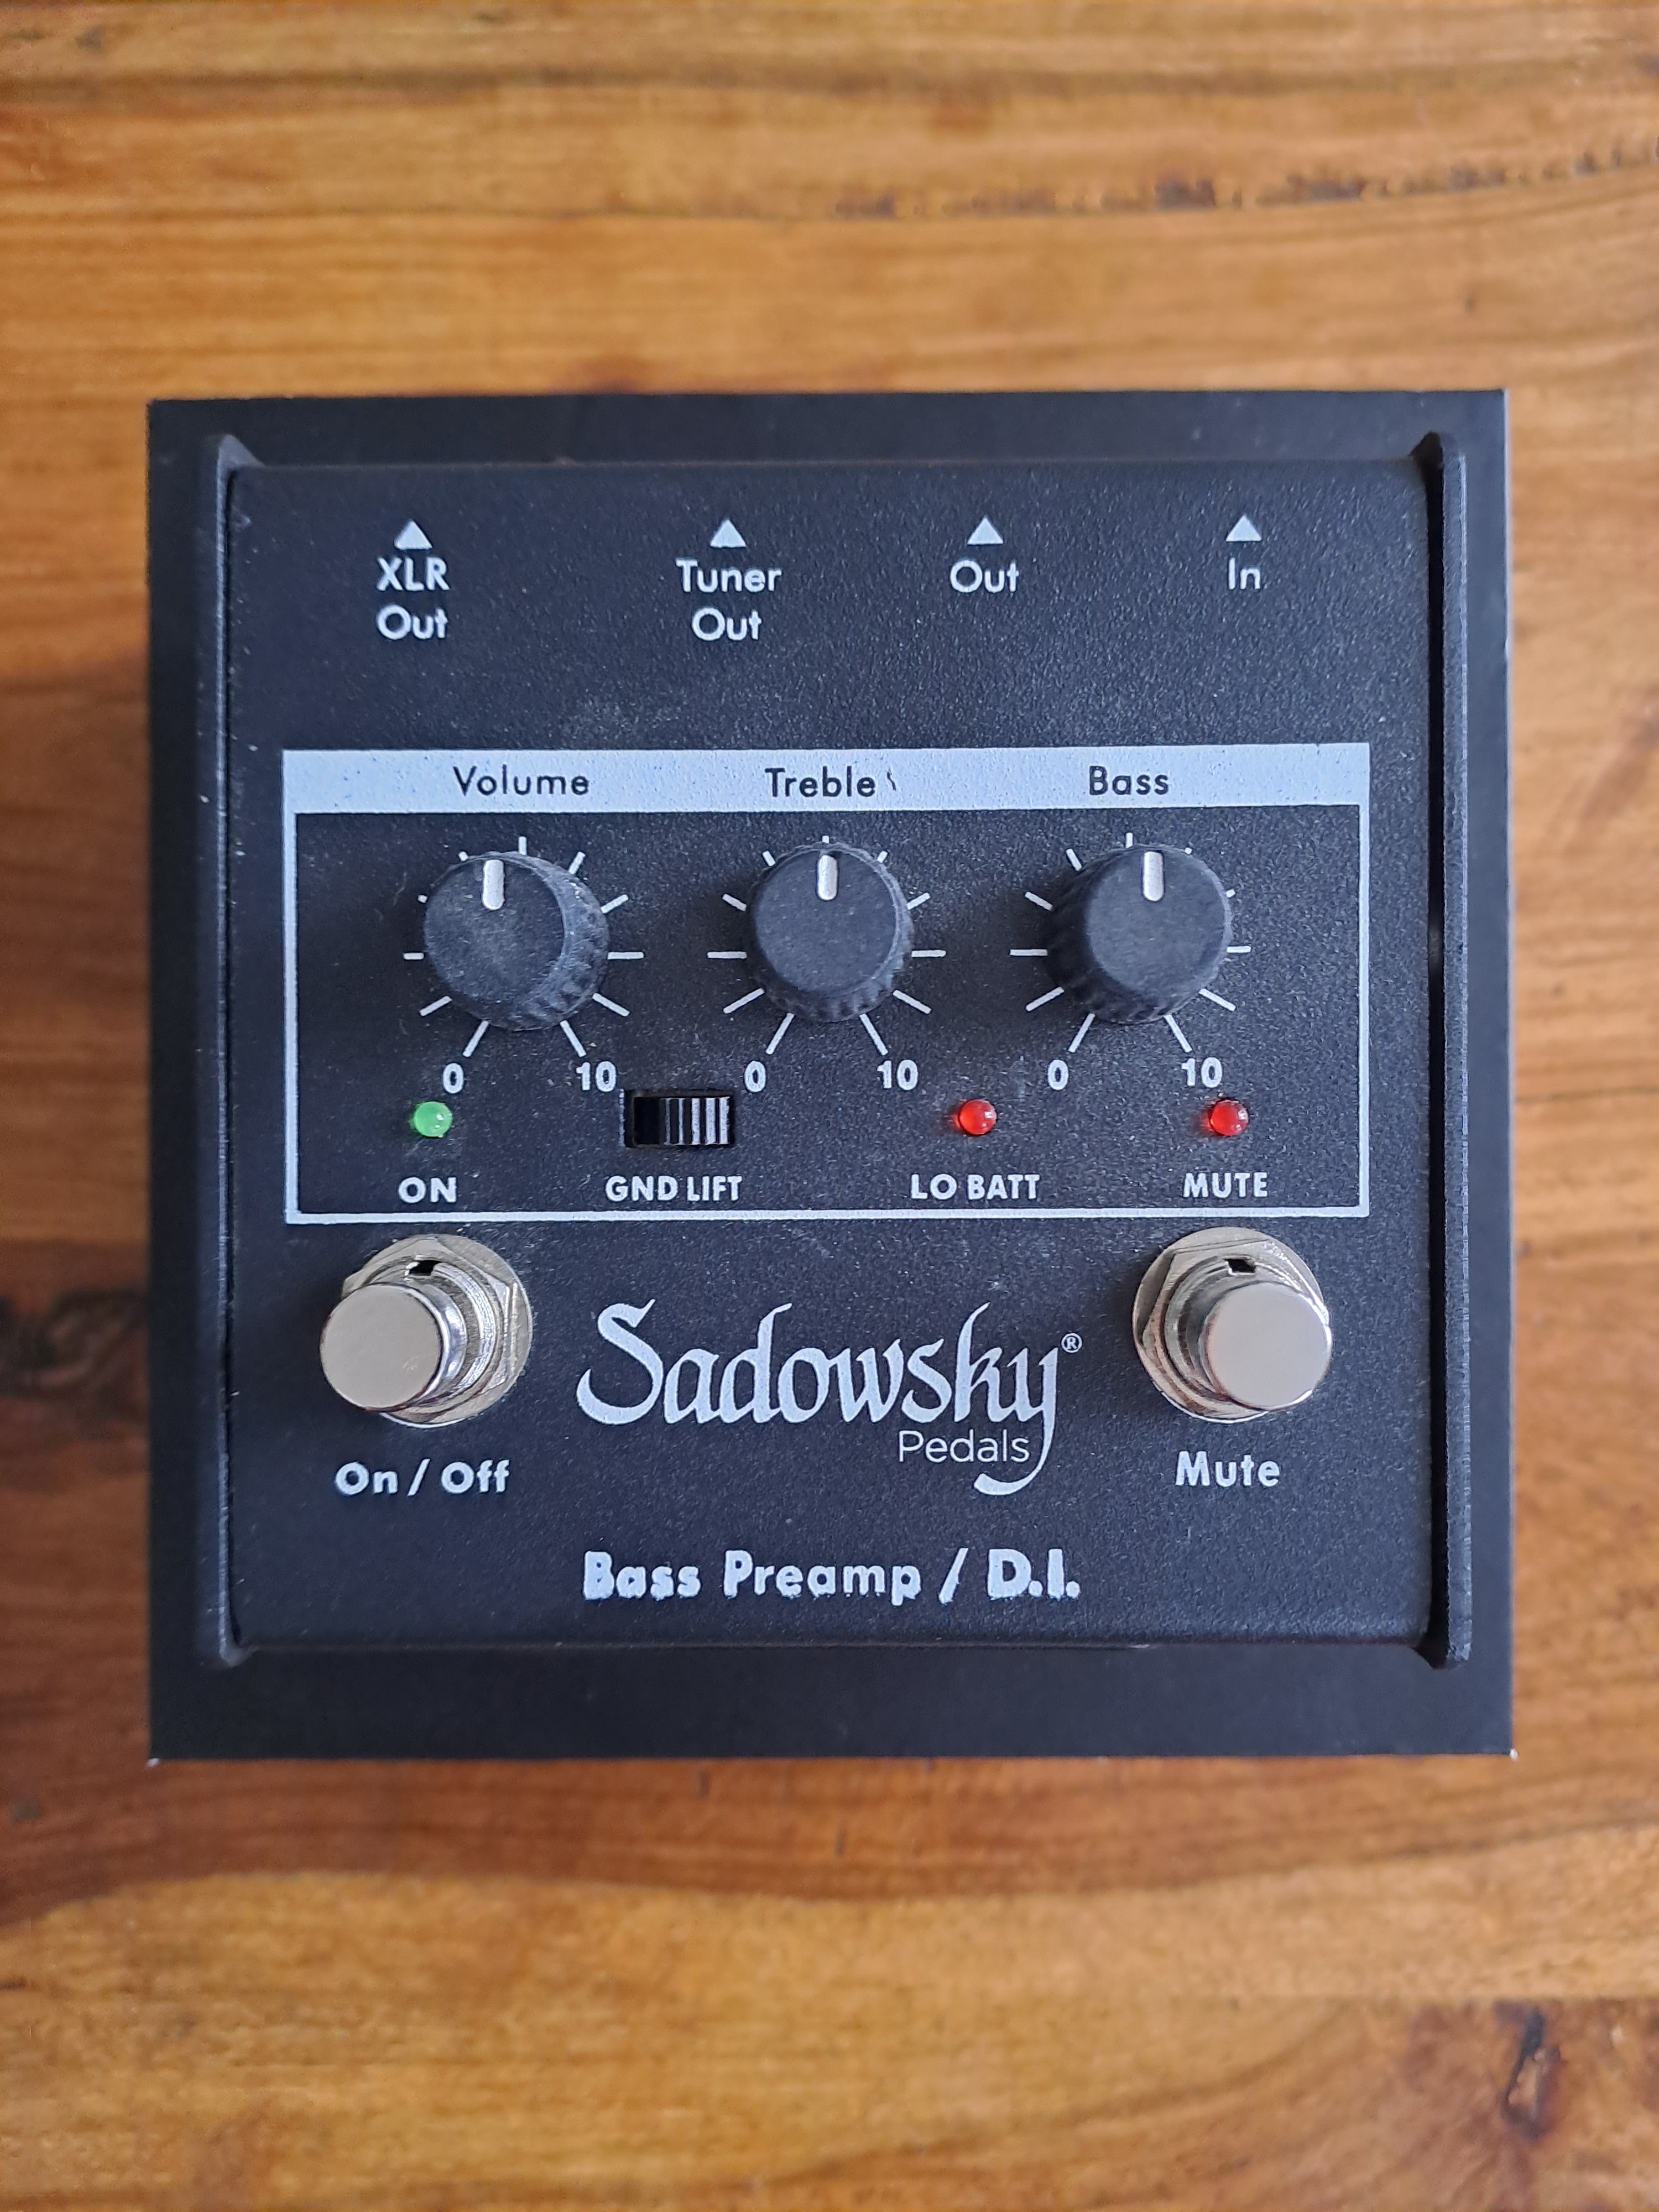 Bass Preamp / D.I. - Sadowsky Bass Preamp / D.I. - Audiofanzine